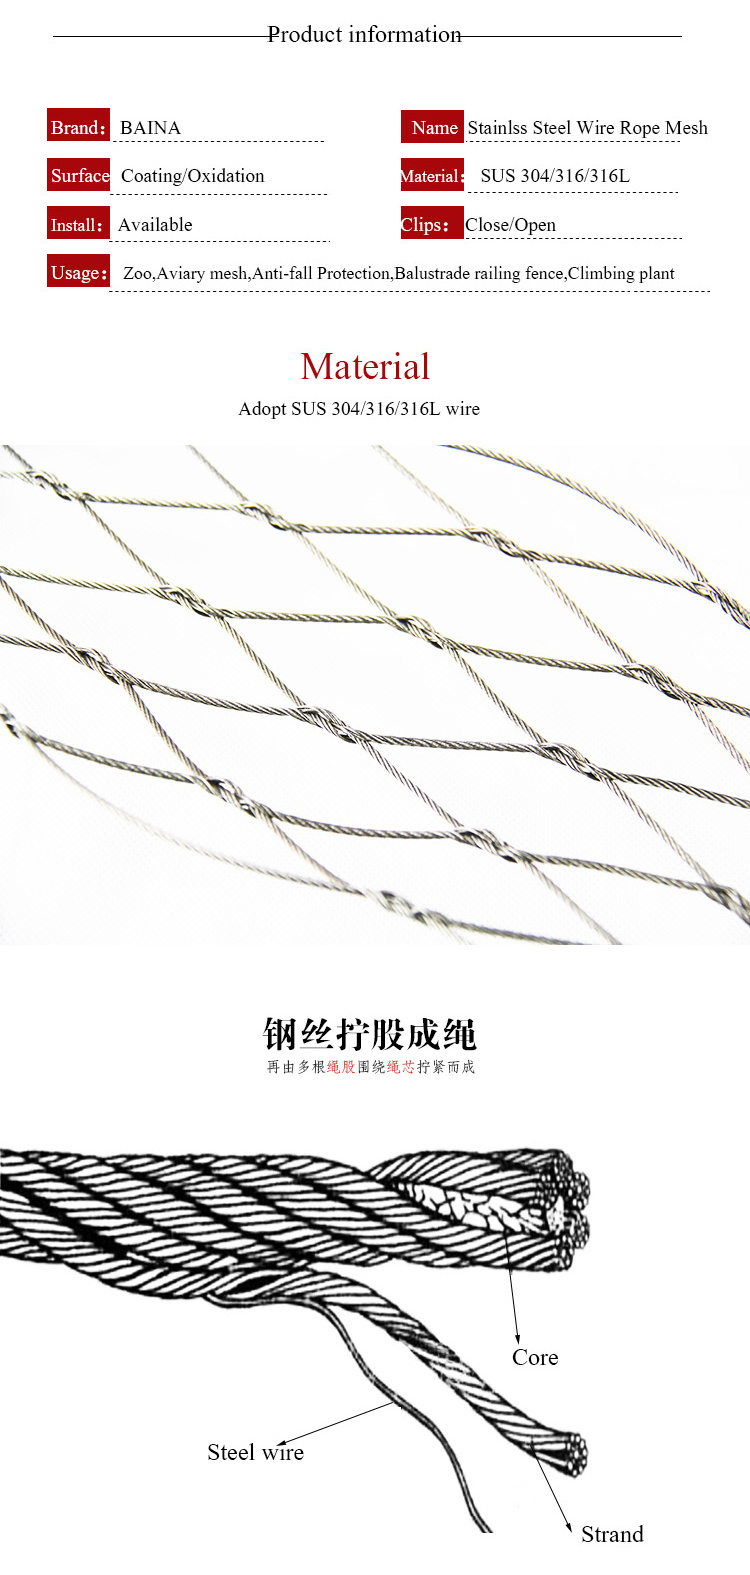 Flexible Netting / Stainless Steel Flexible Wire Mesh Netting / Stainless Steel Wire Mesh Netting / Stainless Steel Wire Rope Mesh Net